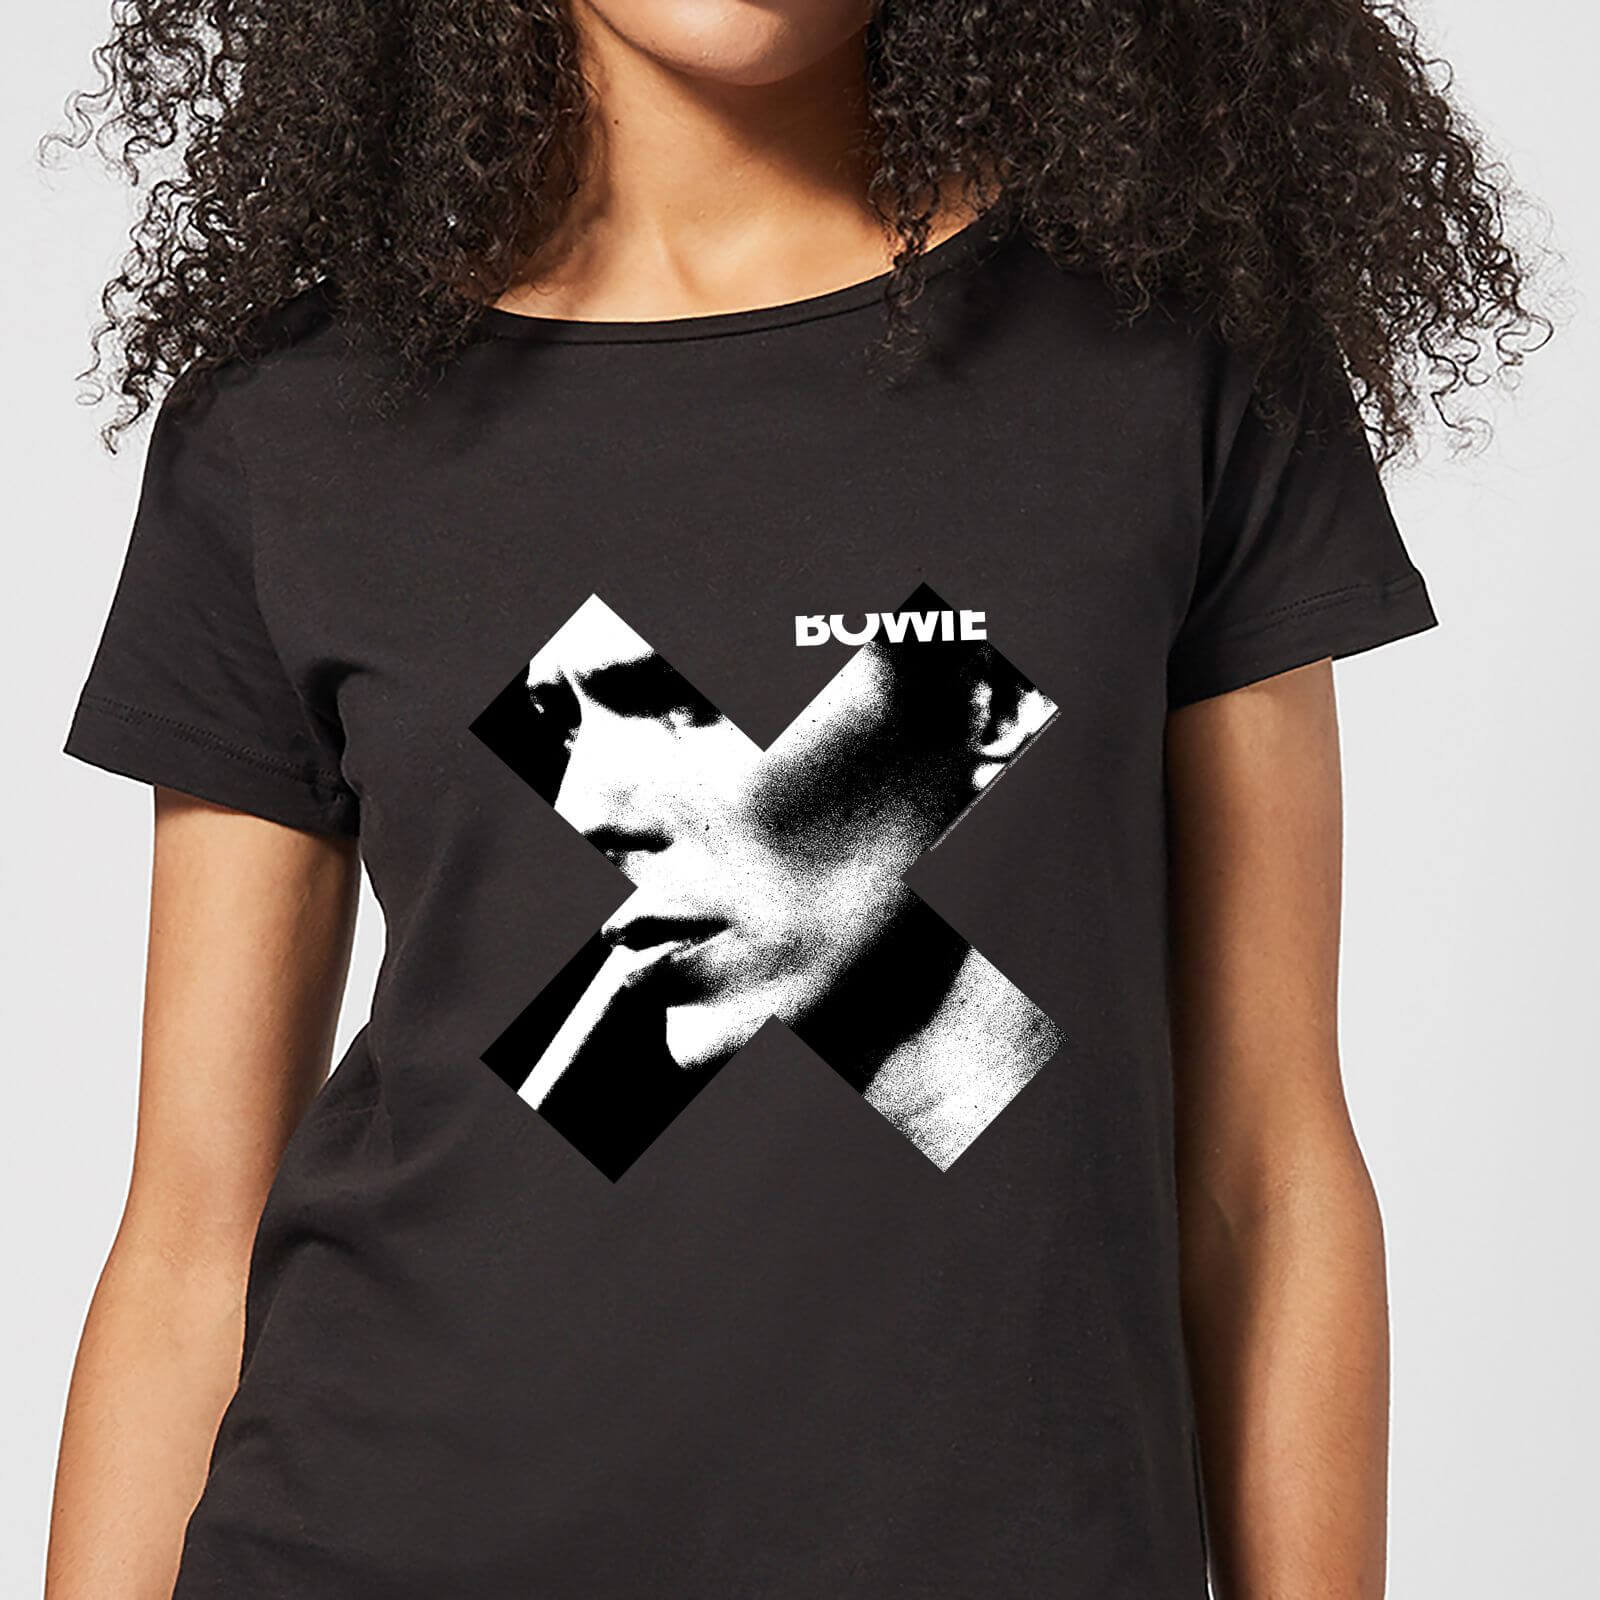 David Bowie X Smoke Women's T-Shirt - Black - S